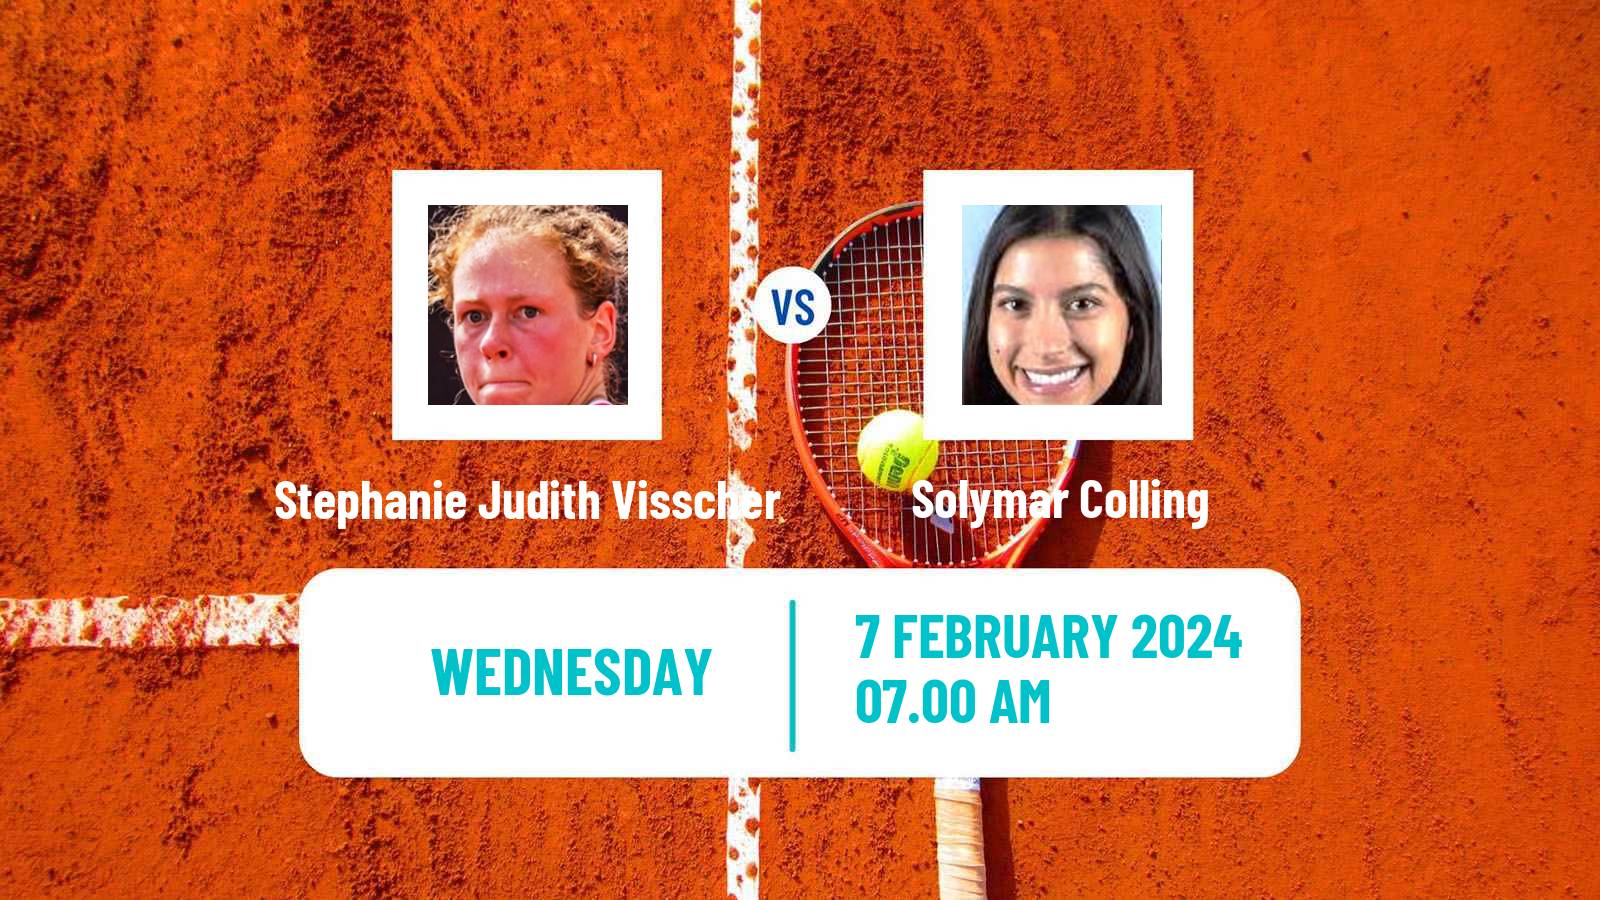 Tennis ITF W15 Monastir 4 Women Stephanie Judith Visscher - Solymar Colling